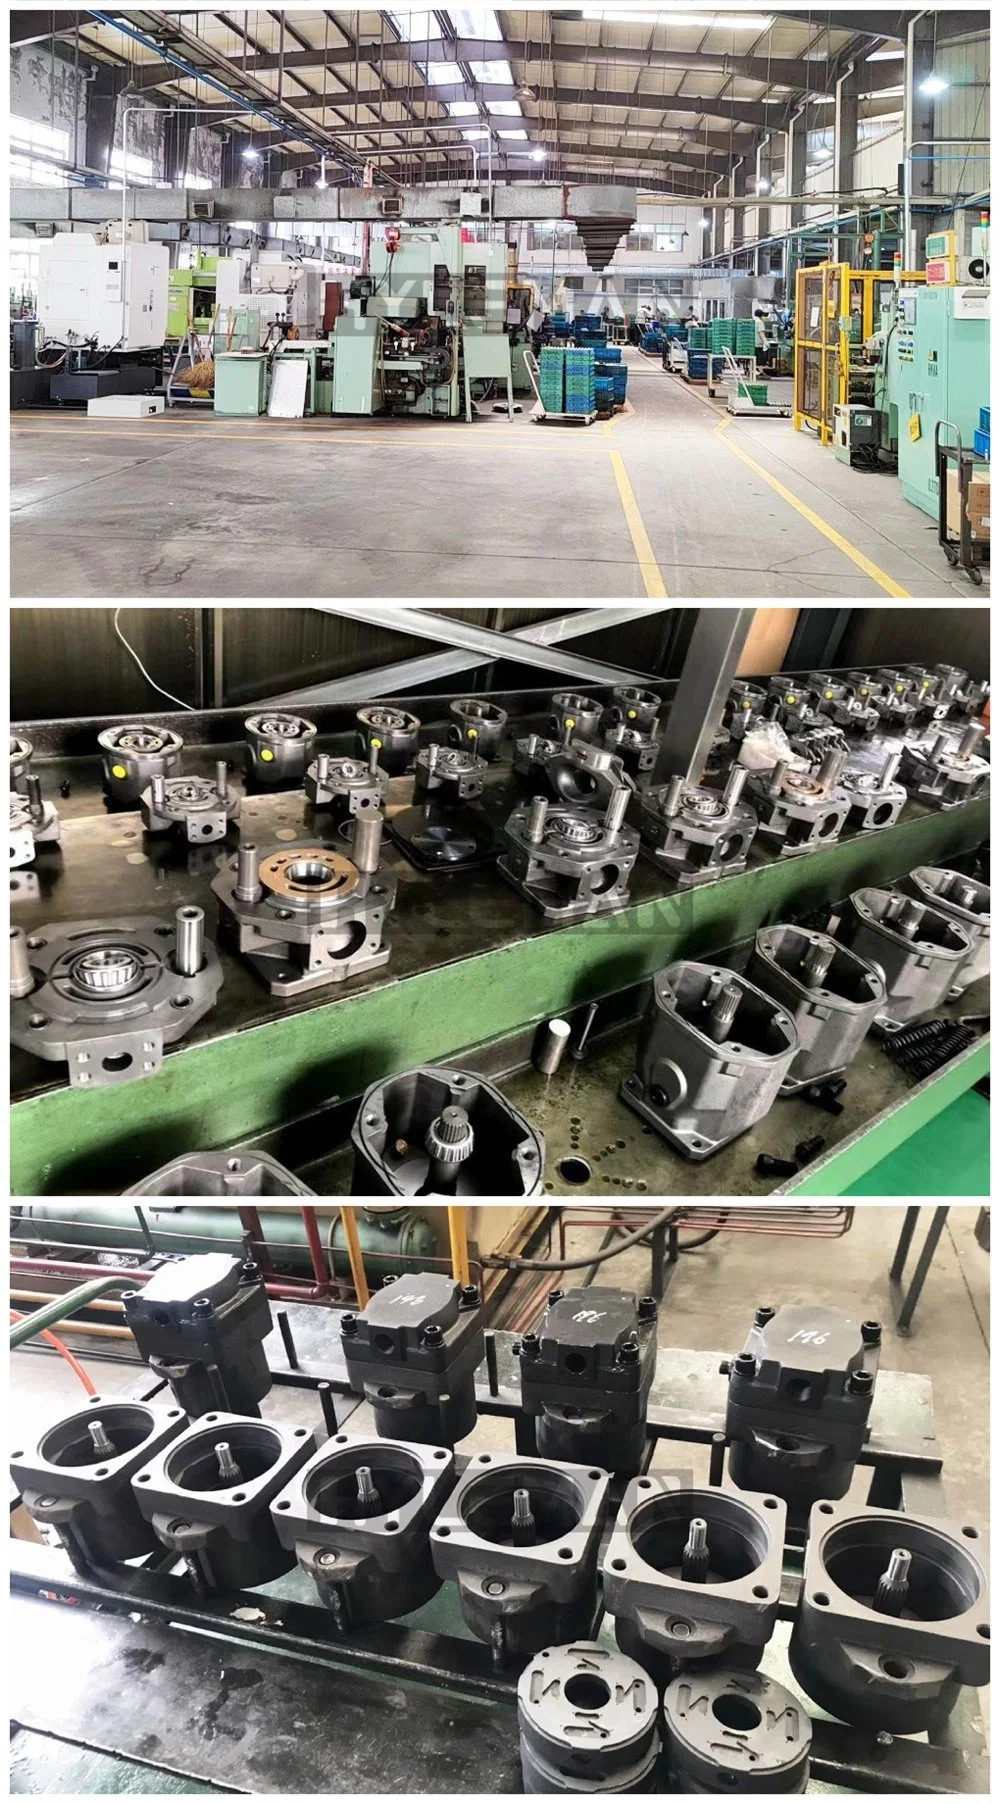 Hydraulic Pressure Pump Tokimec Sqp2, Sqp3, Sqp4 Applied for Machine-Tools, Presses, Die Casting Machine